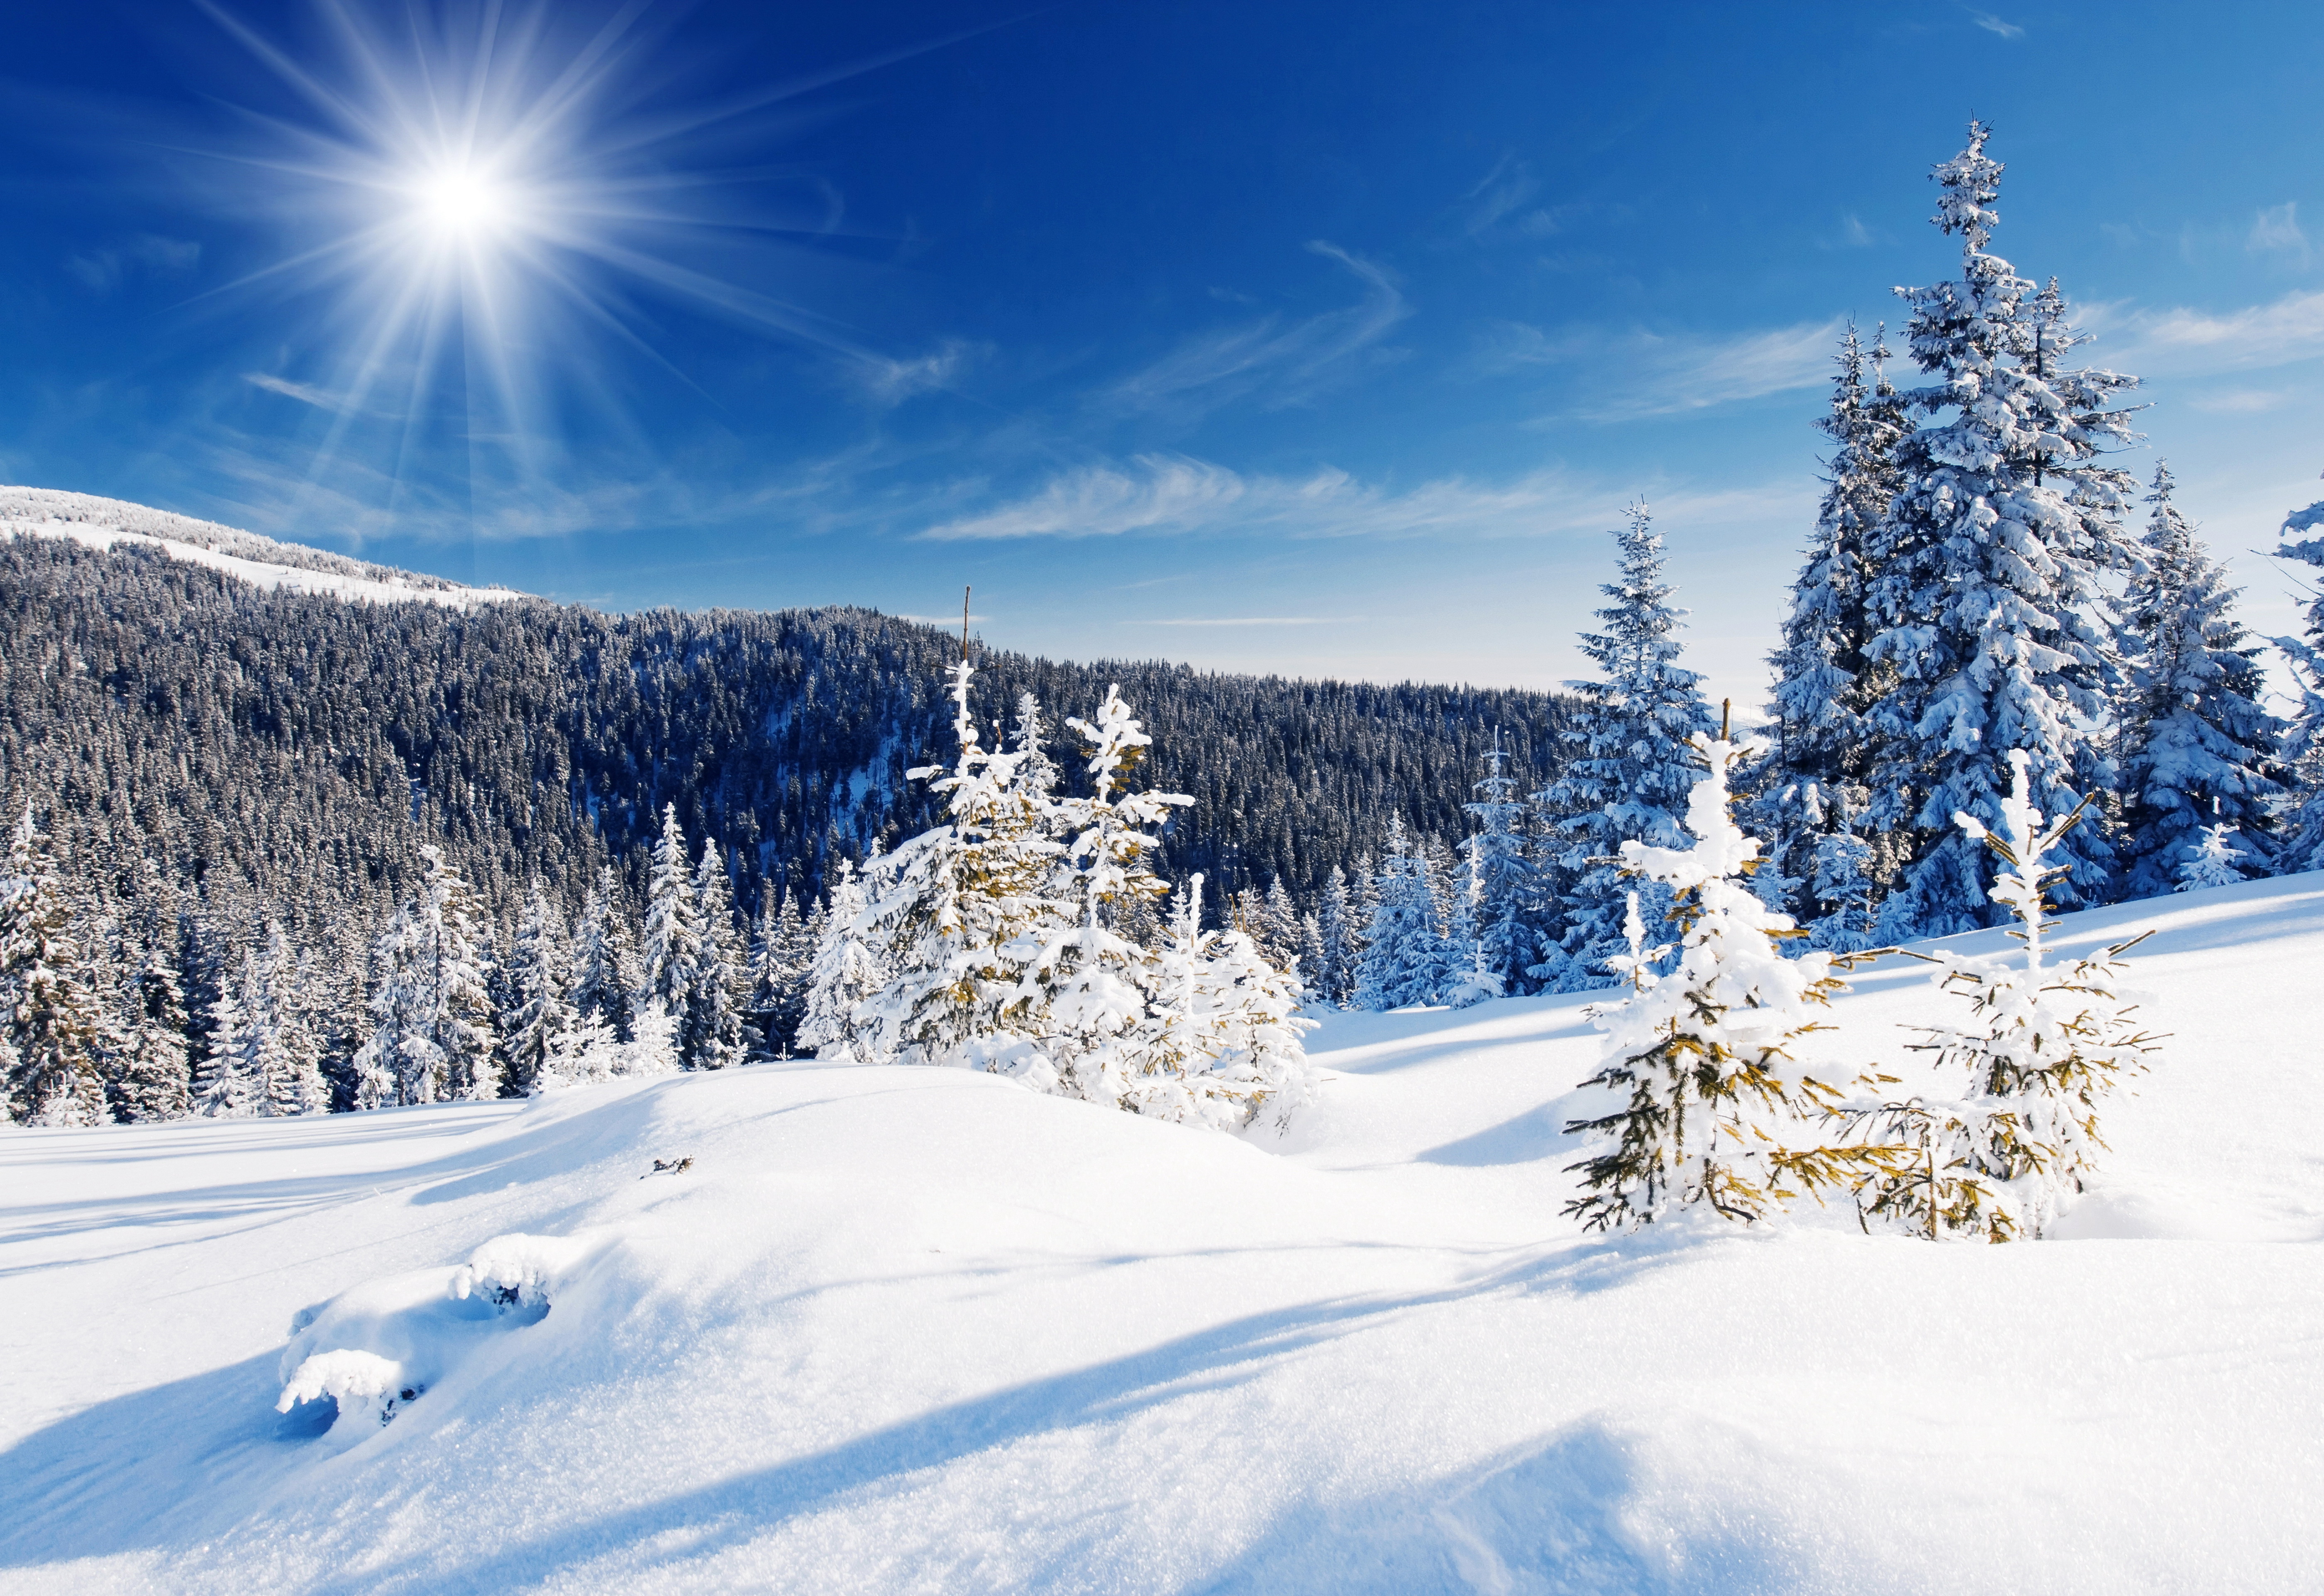 Картинка зимний период. Зимний лес. Зимний пейзаж. Красивая зима. Зимняя природа.